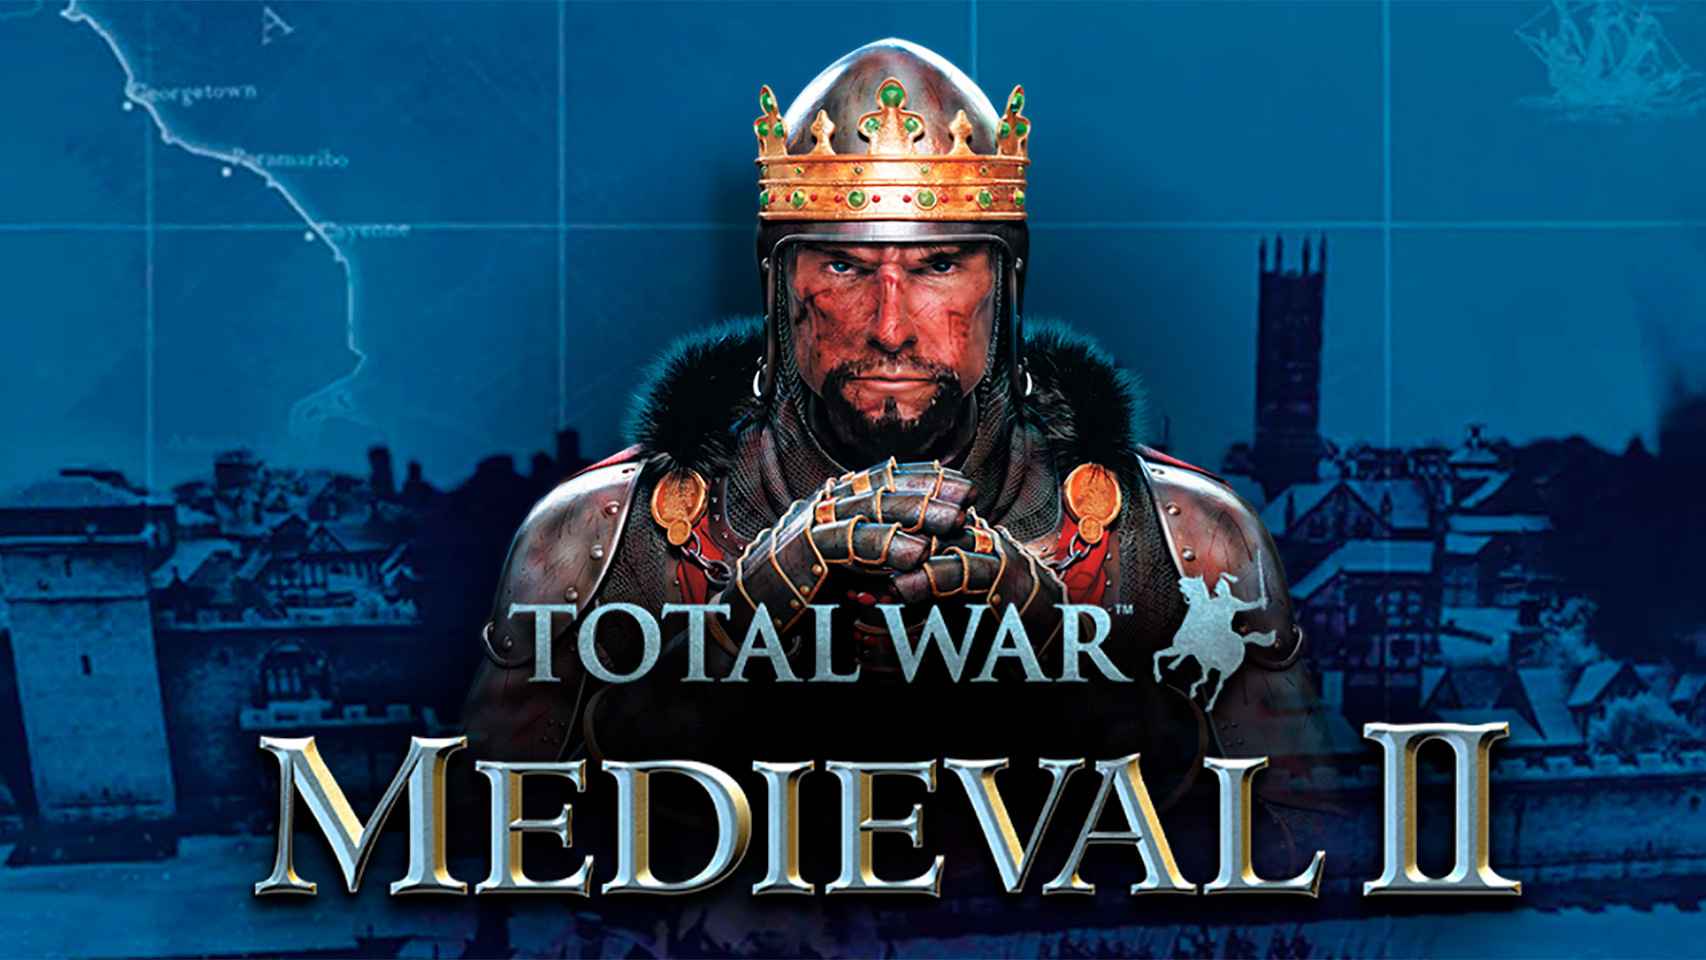 Total War: Medieval II trae la mejor estrategia a tu móvil Android